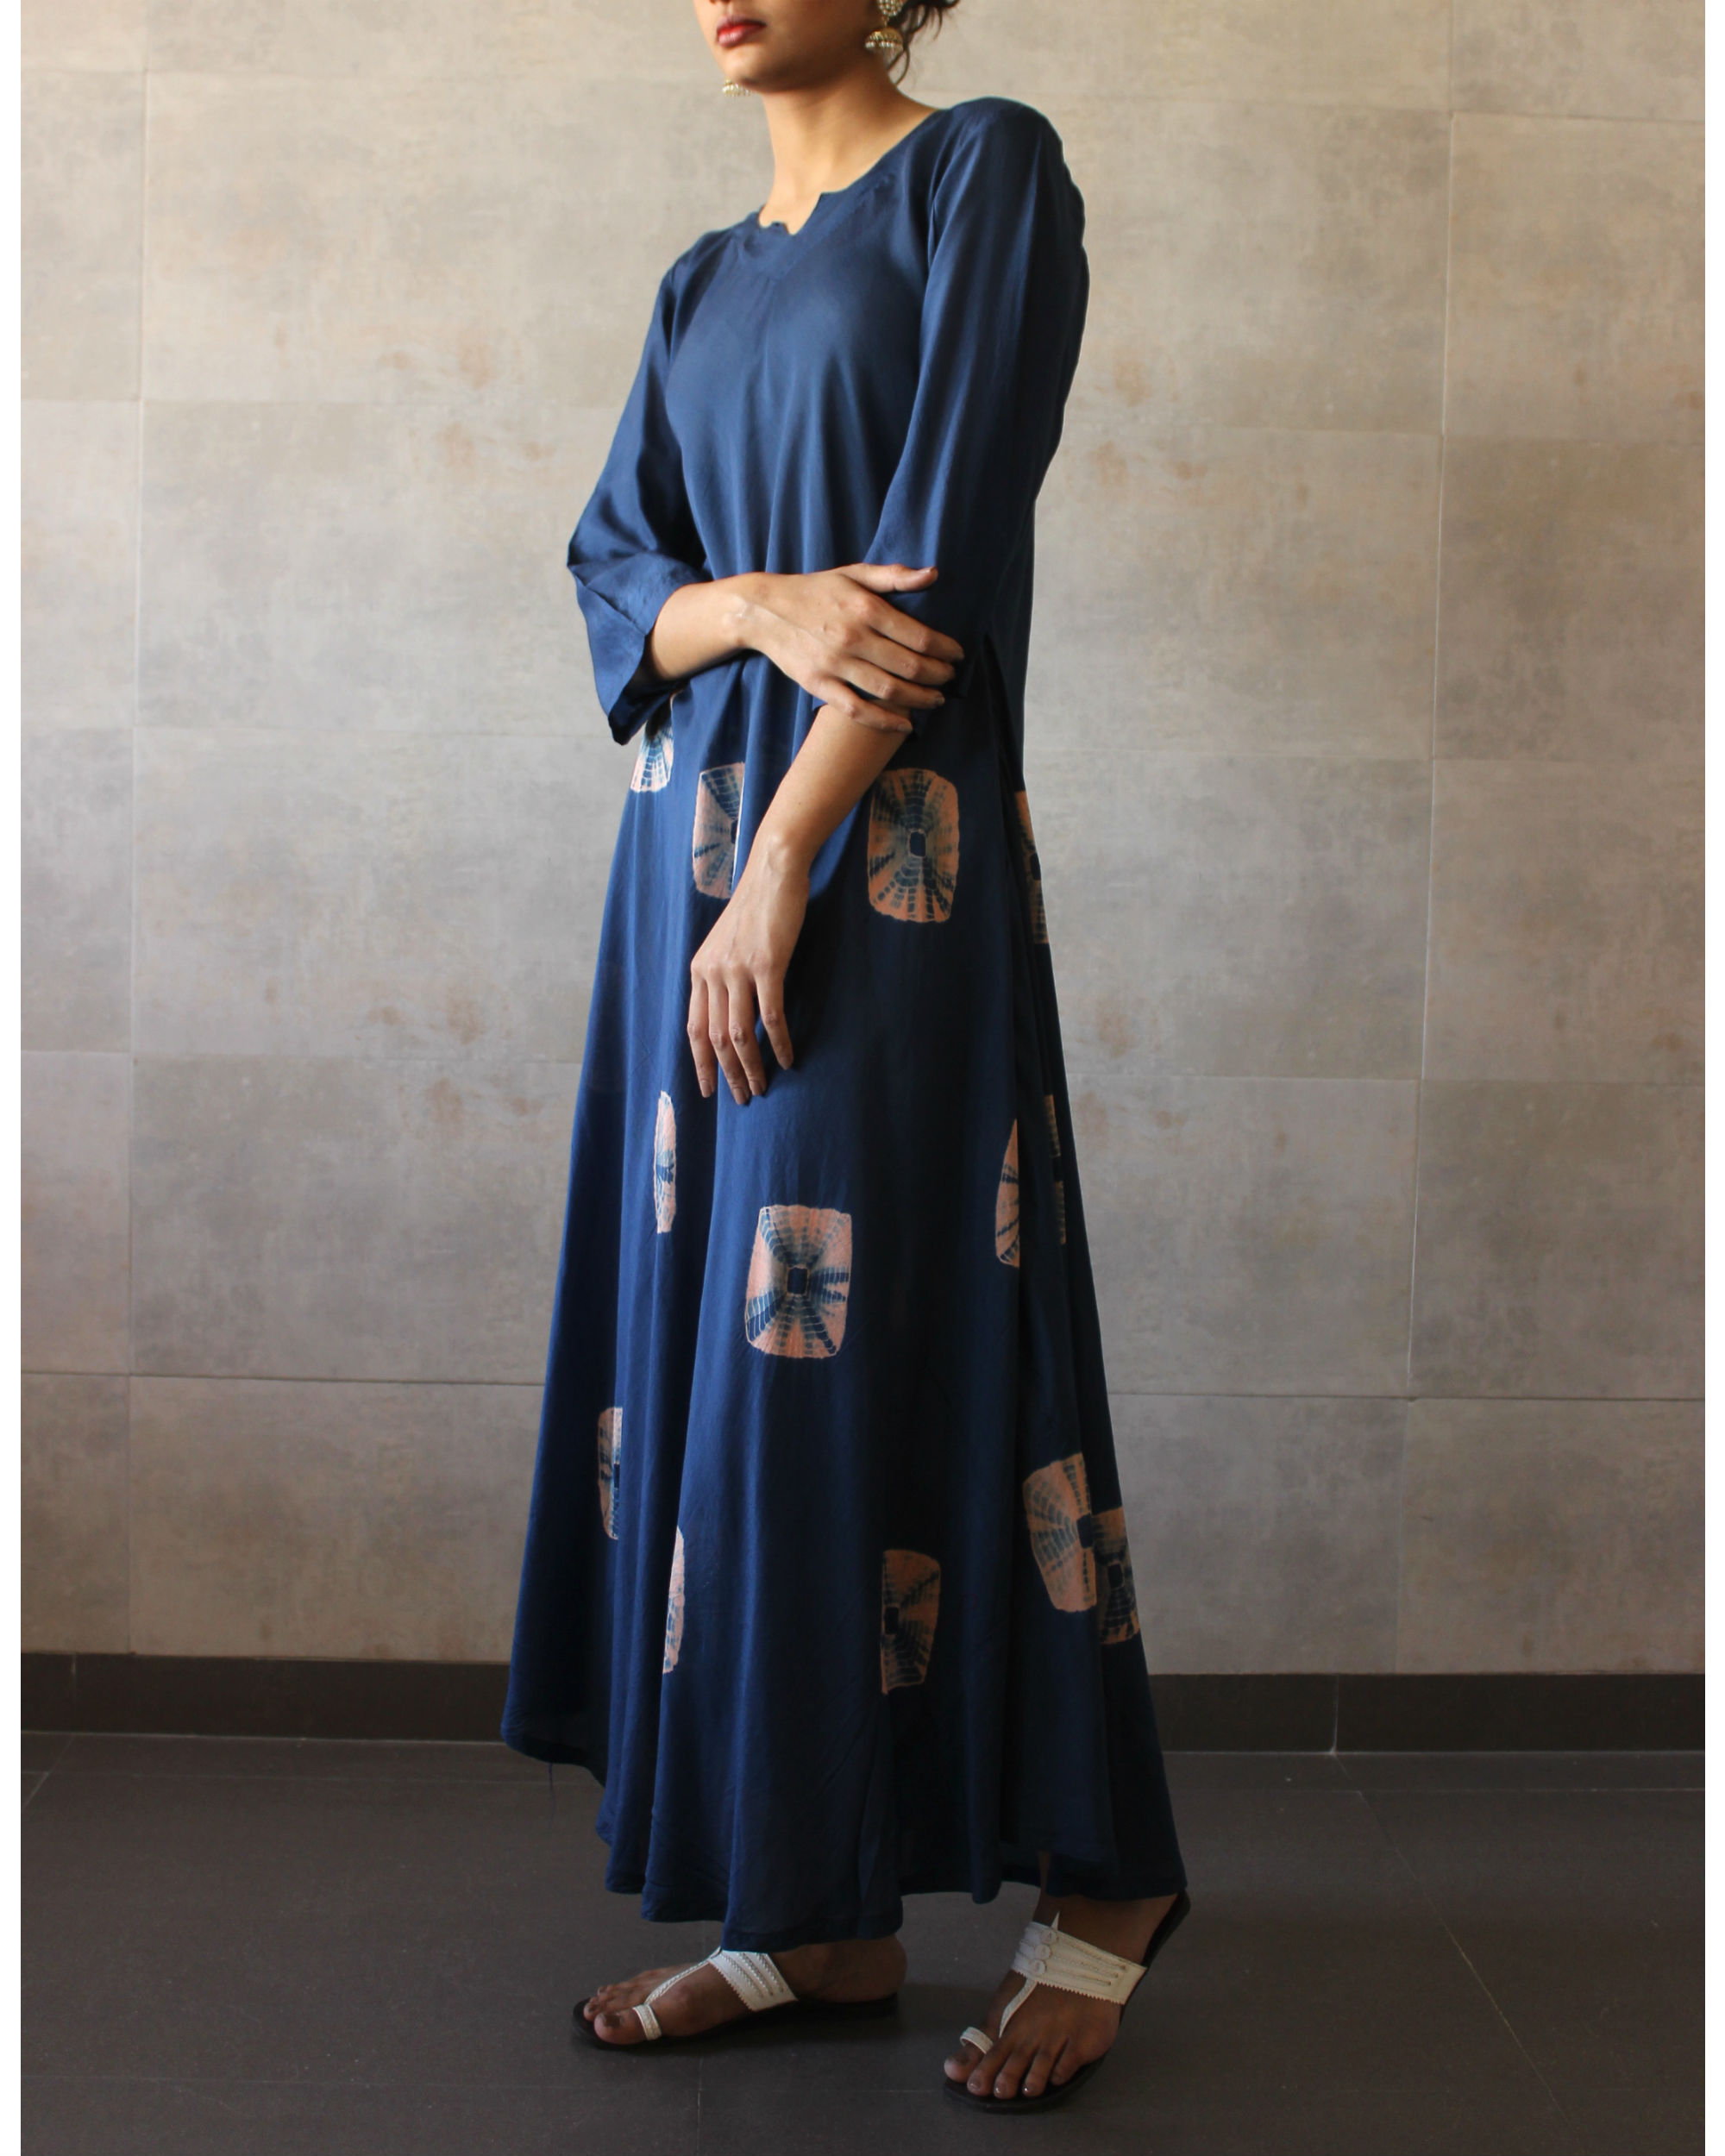 Navy blue bandhej dress by The Label Studio | The Secret Label